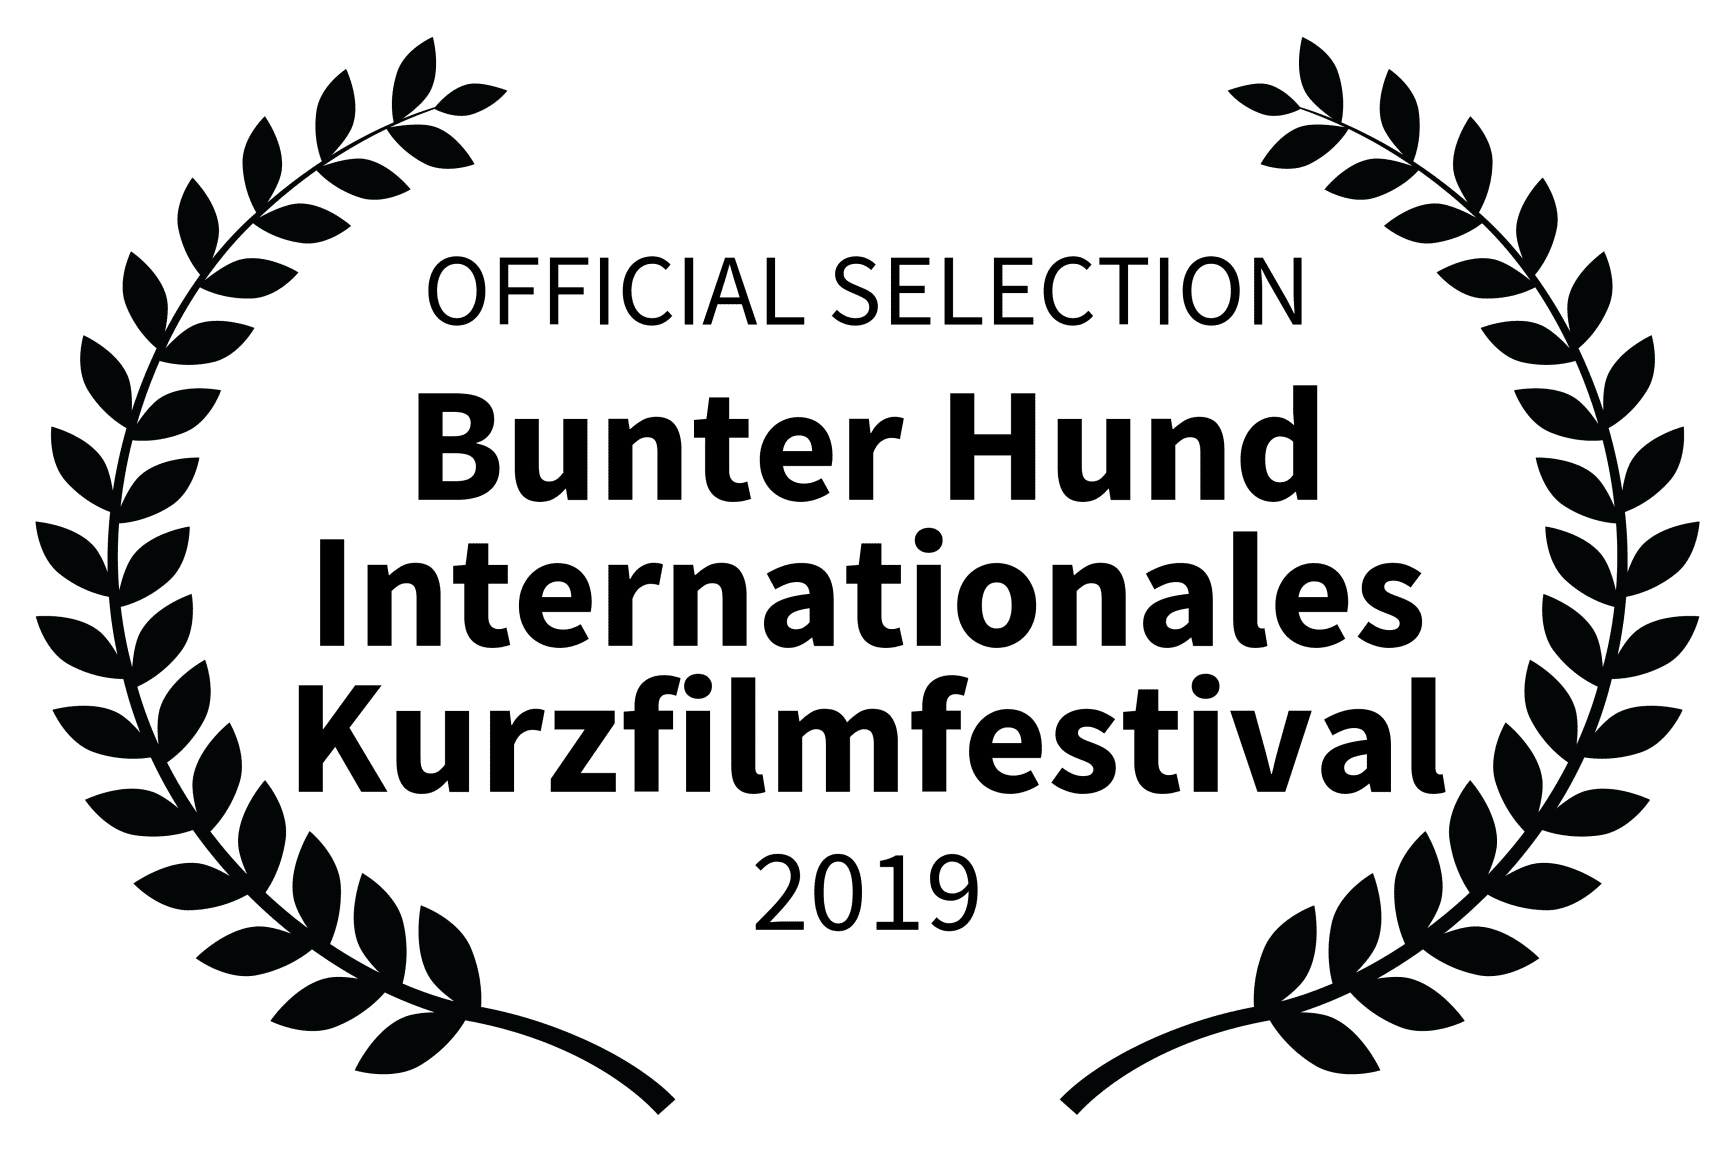 OFFICIAL SELECTION - Bunter Hund Internationales Kurzfilmfestival - 2019